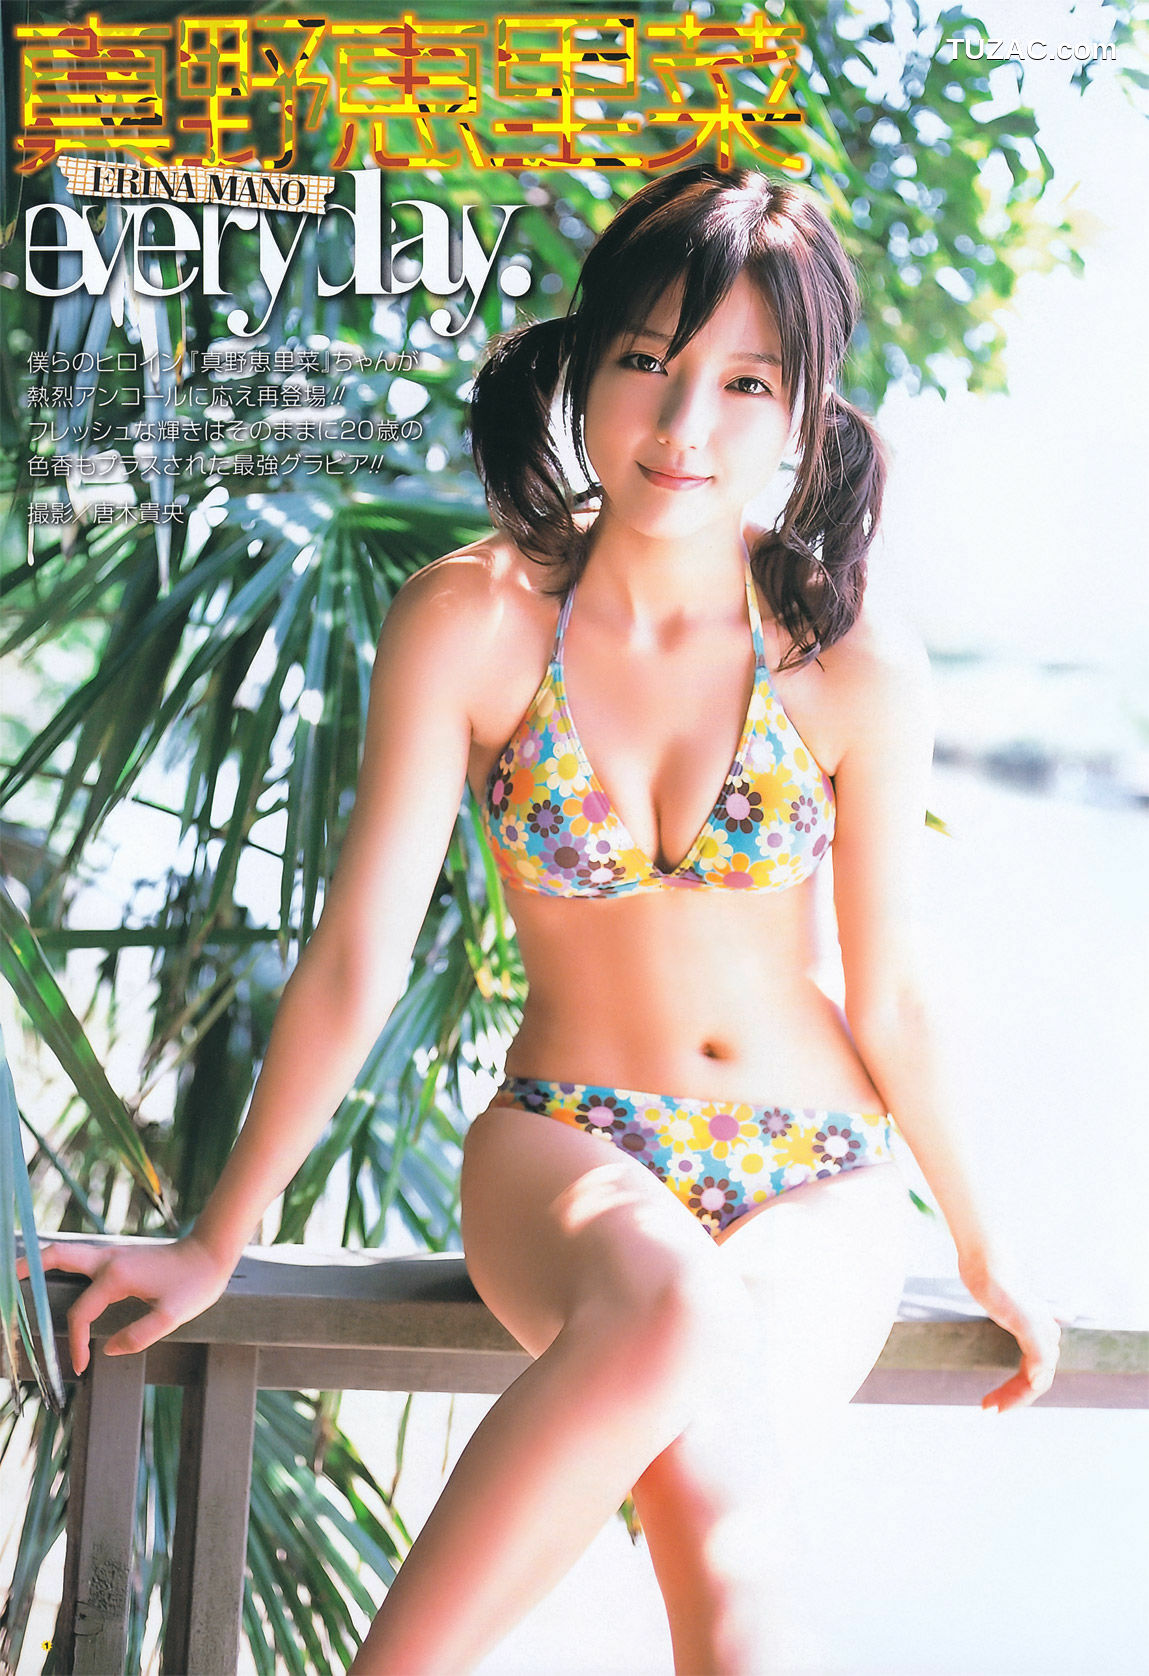 Young Gangan杂志写真_ 真野恵里菜 Erina Mano 2011年No.20 写真杂志[25P]